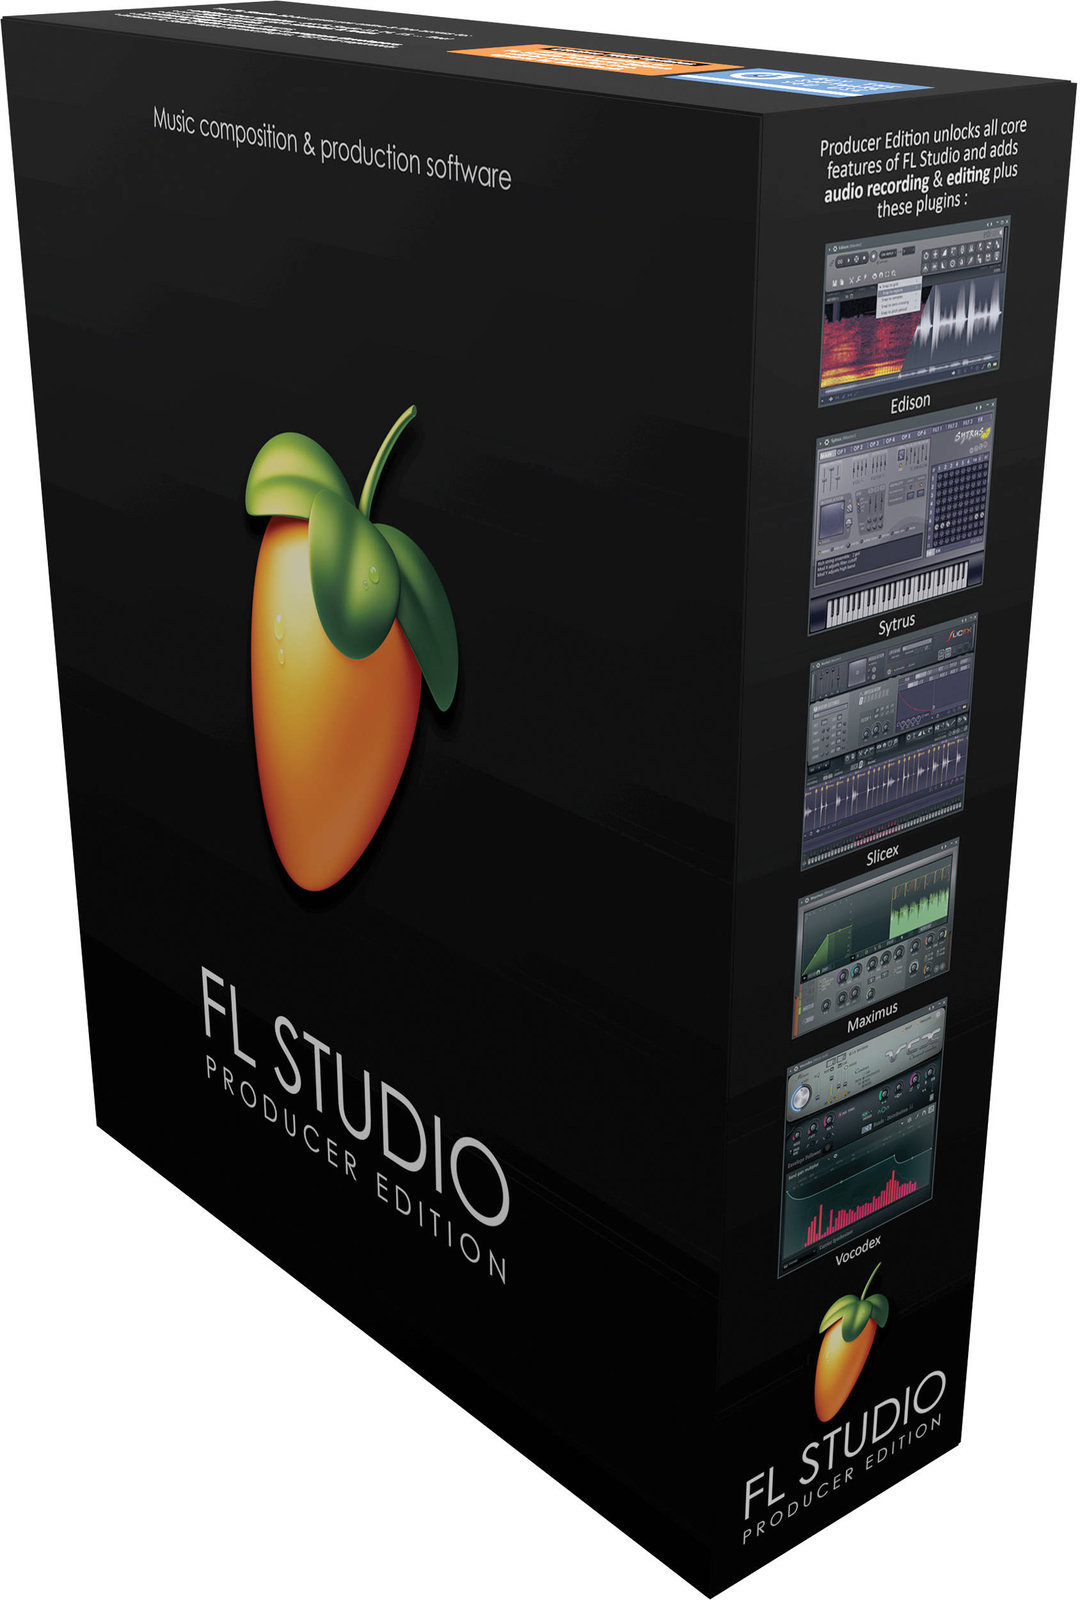 Nahrávací software DAW Image Line FL Studio 12 Producer Edition